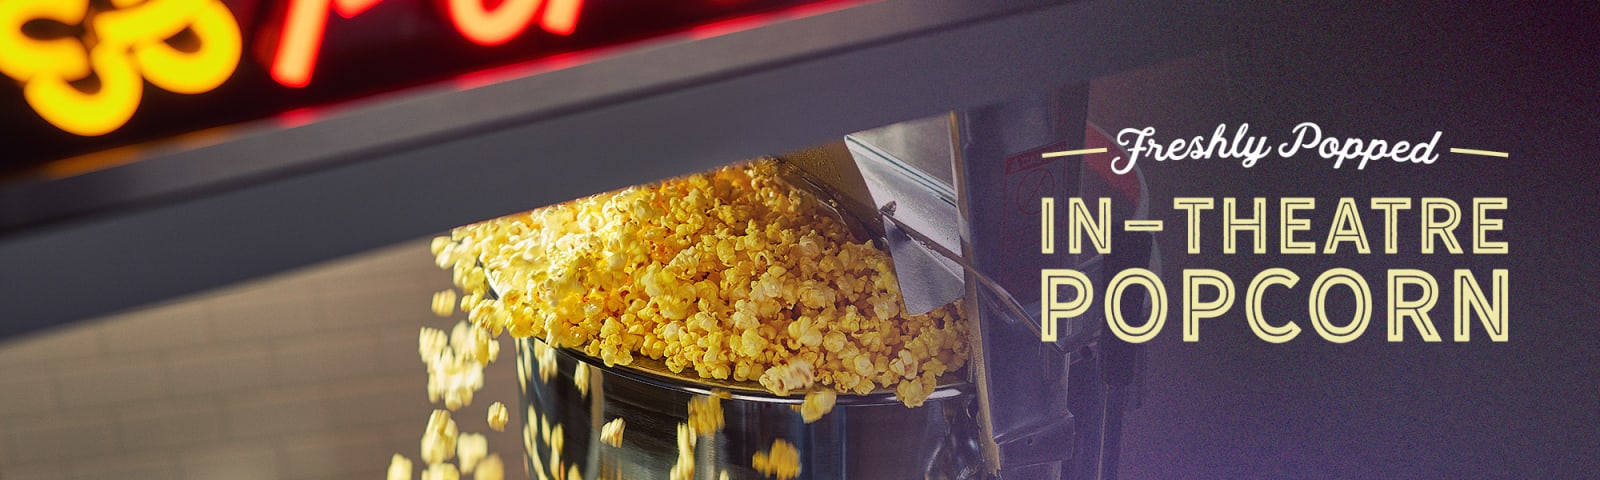 AMC Perfectly Popcorn